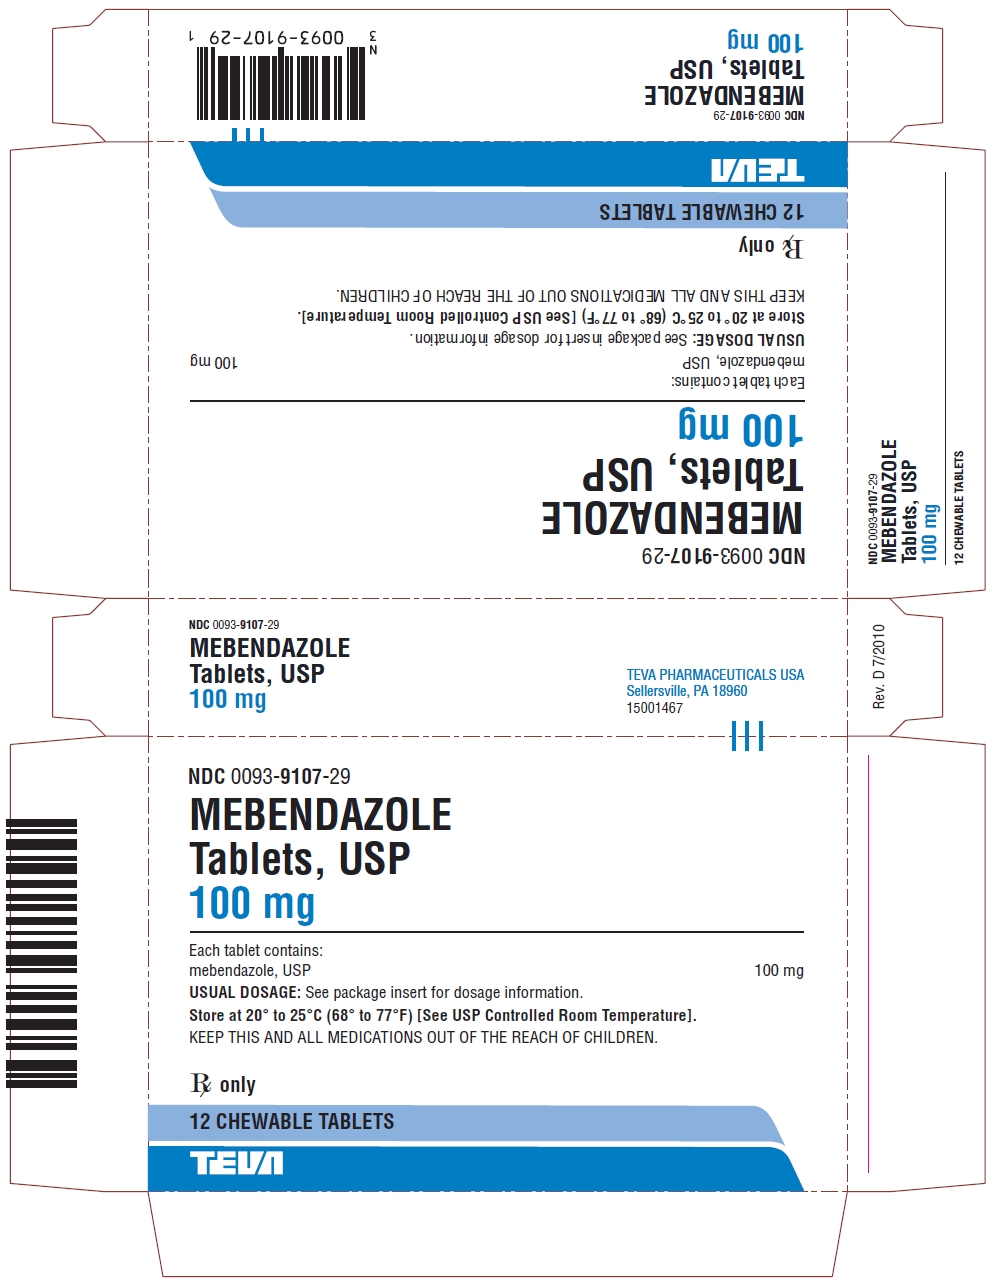 Mebendazole Tabs USP 100 mg 12 Chewable Tabs Box